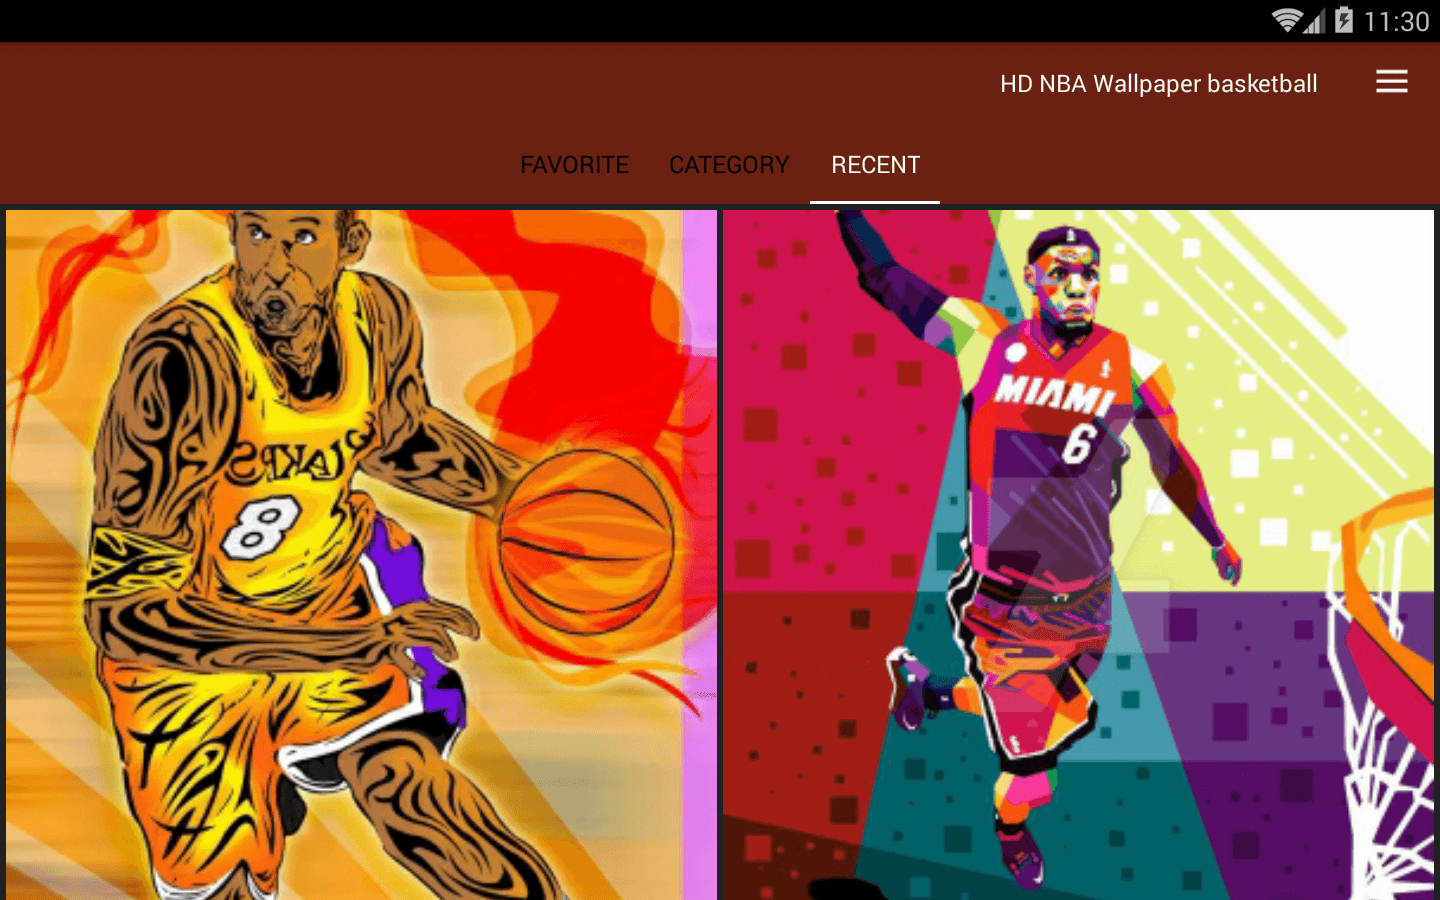 HD NBA Wallpaper Basketball Apps on Google Play